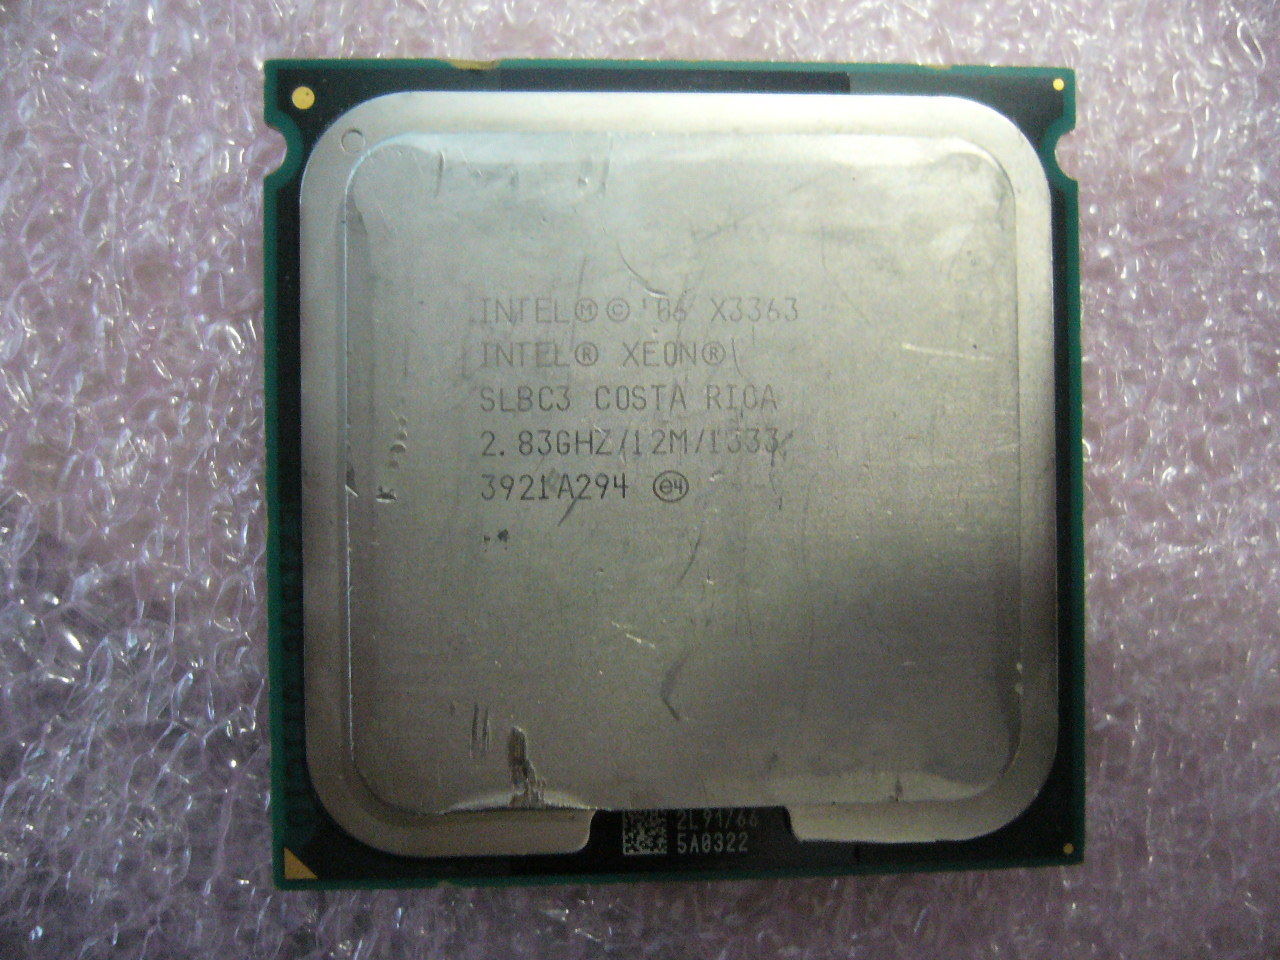 QTY 1x Intel Xeon CPU Quad Core X3363 2.83Ghz/12MB/1333Mhz LGA771 SLASC SLBC3